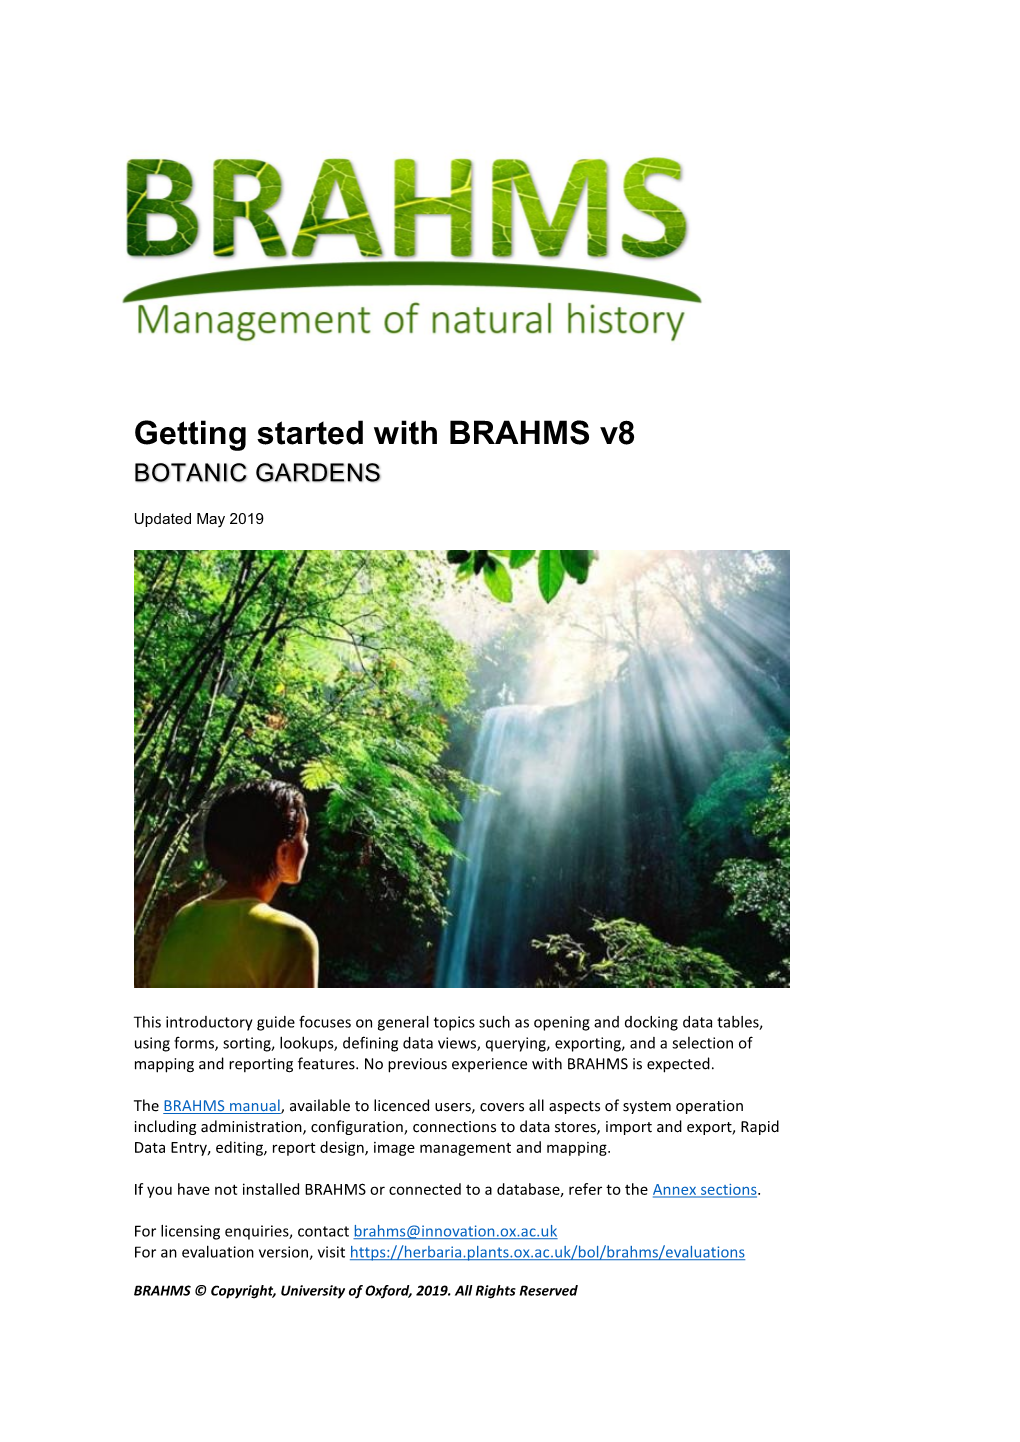 Getting Started with BRAHMS V8 BOTANIC GARDENS